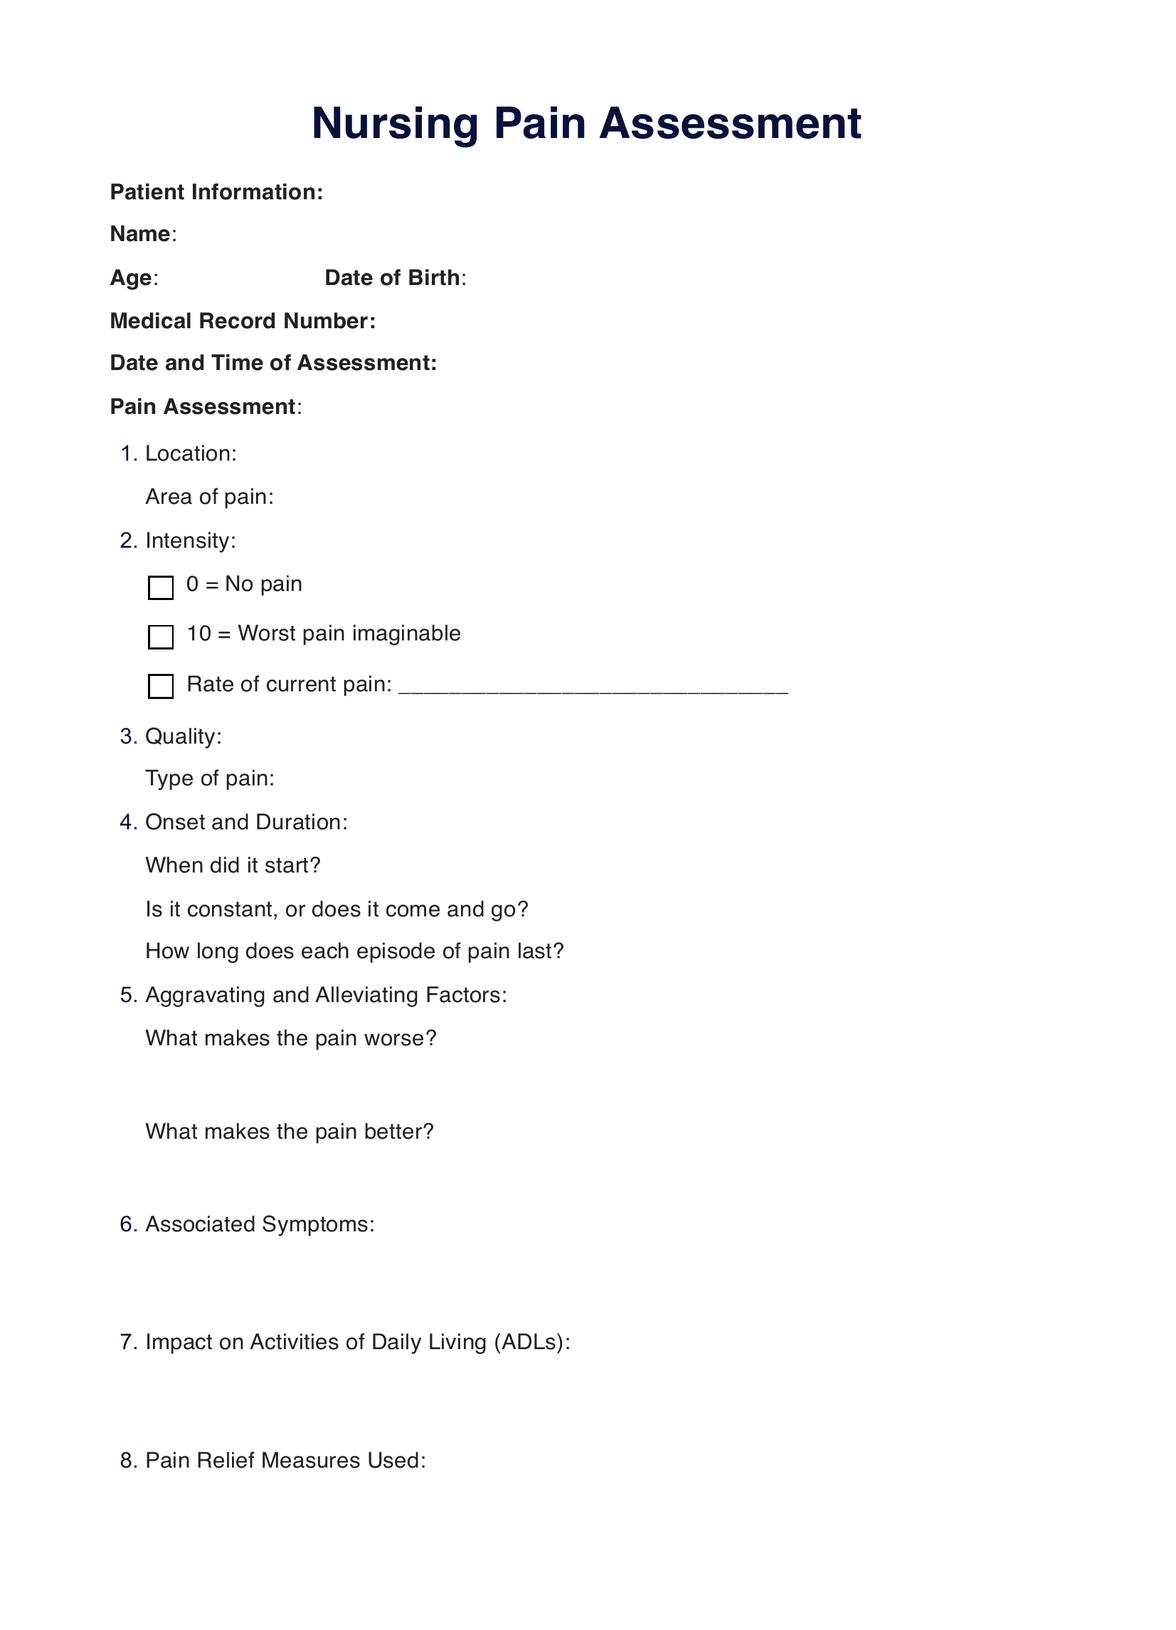 Nursing Pain Assessment Template PDF Example